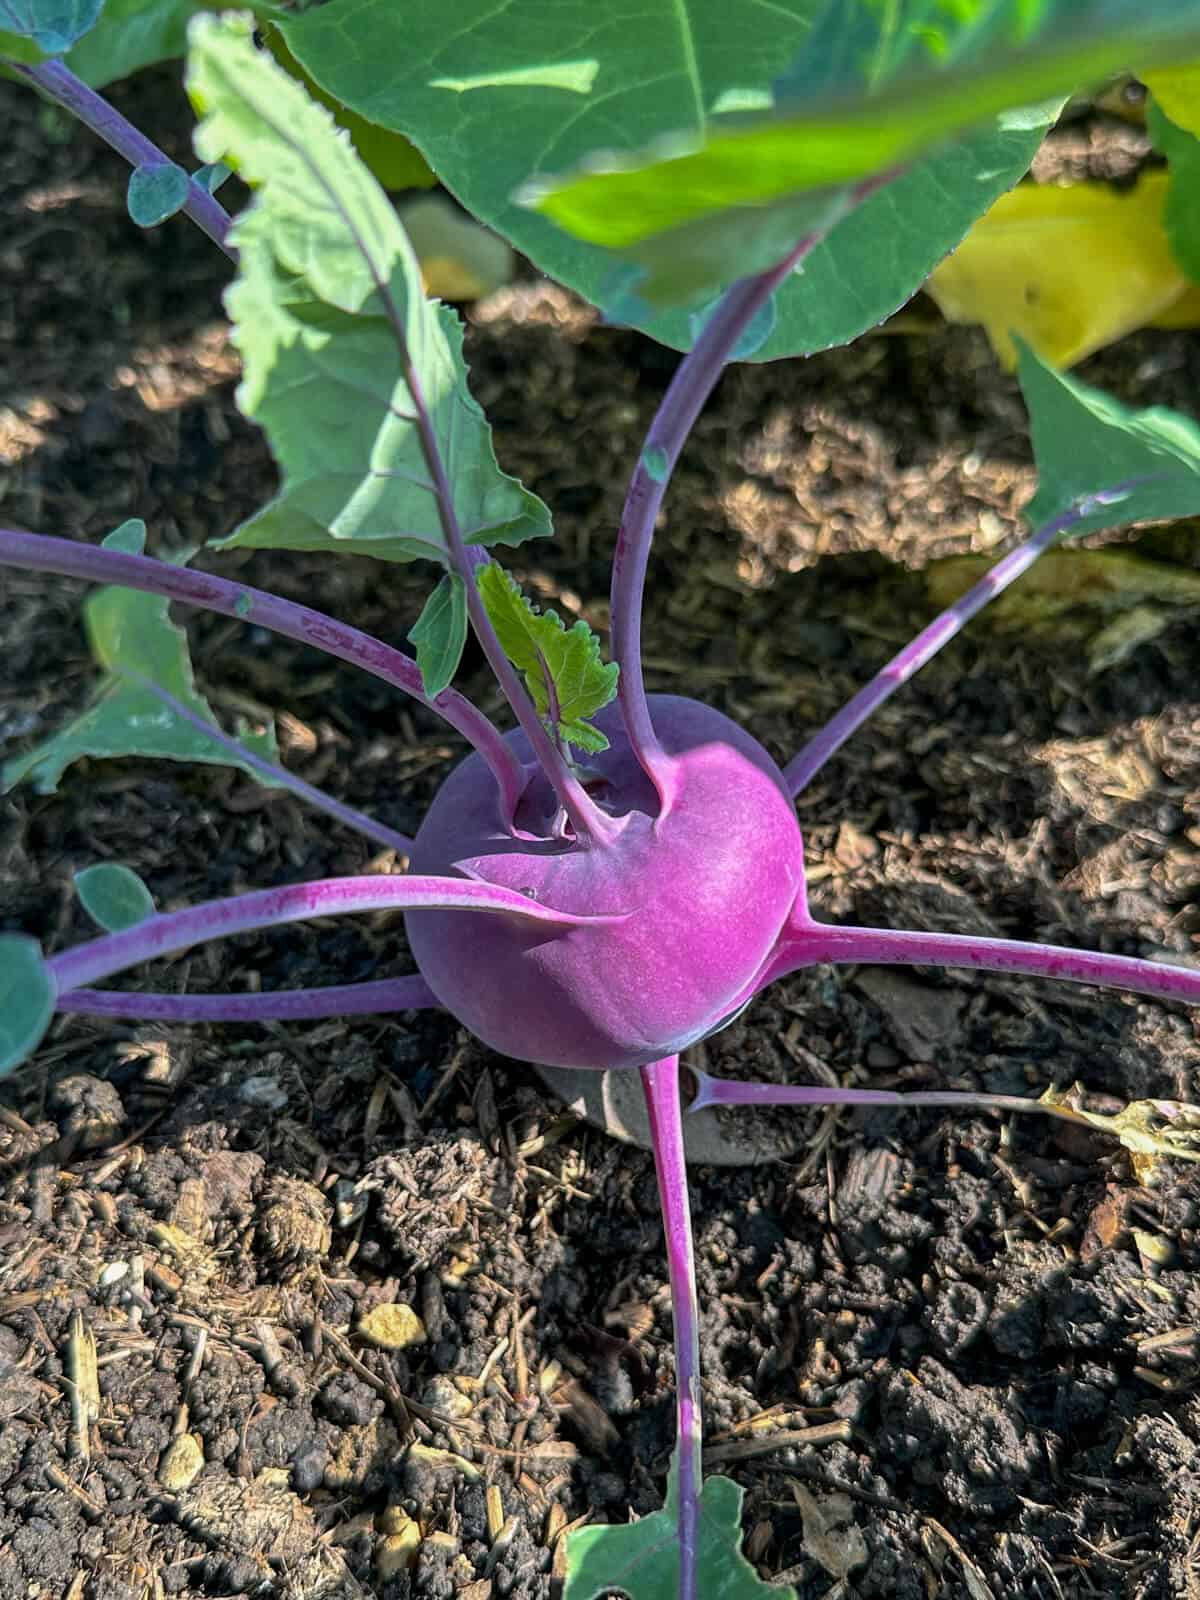 A purple kohlrabi growing in the ground.